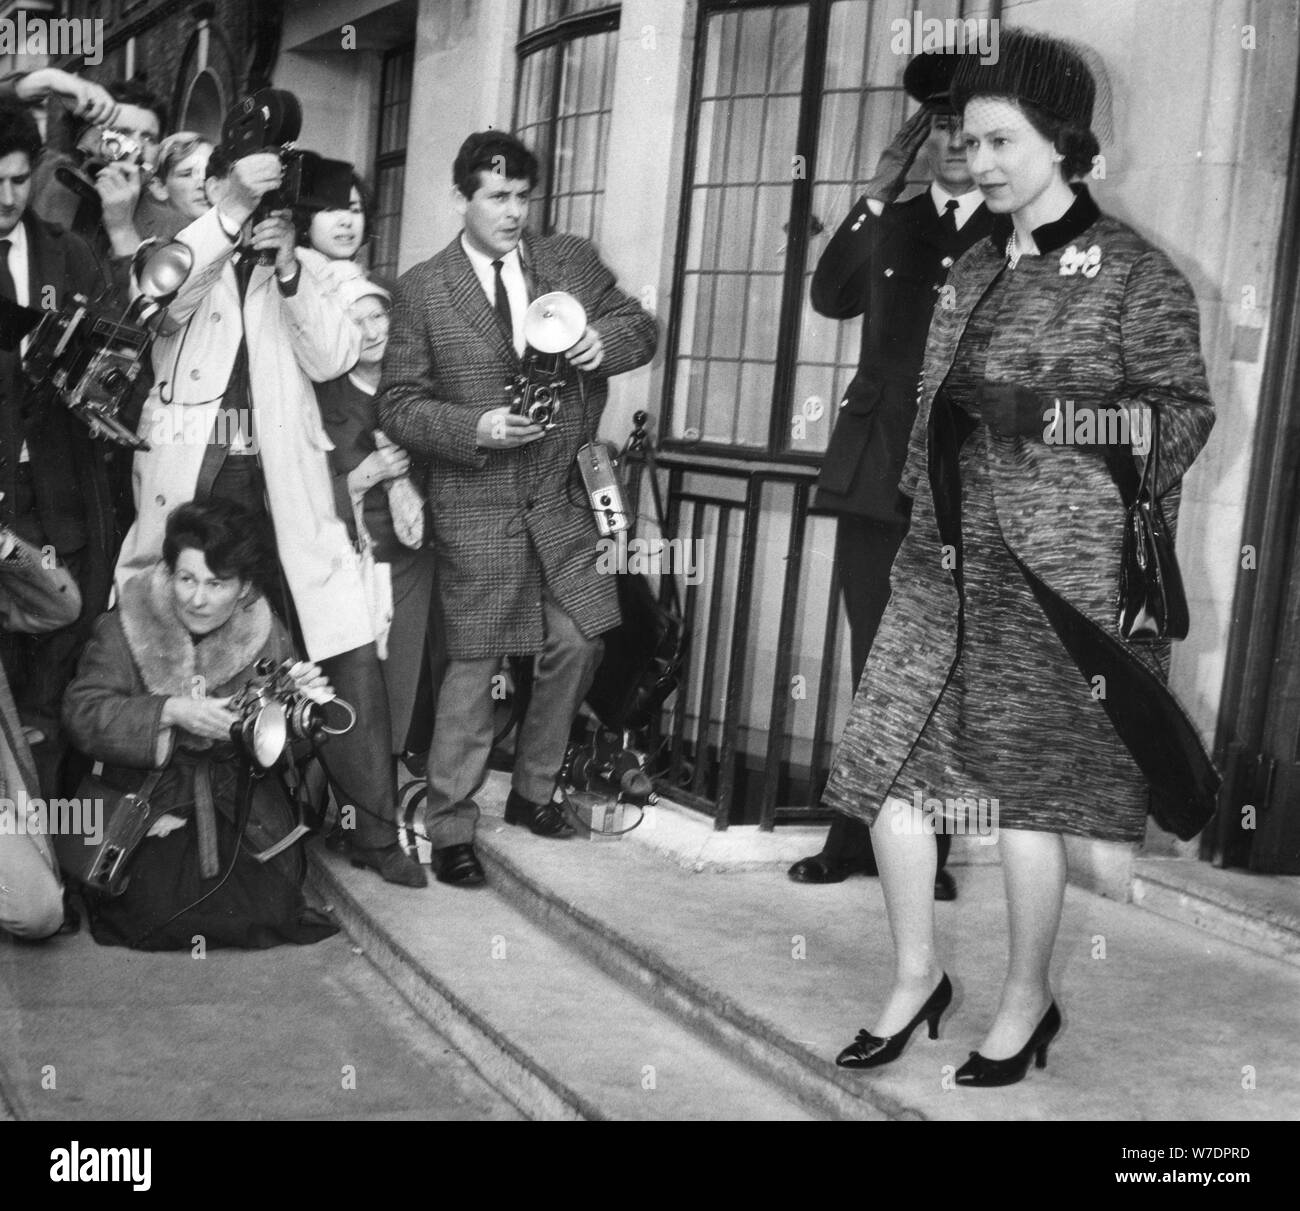 Queen Elizabeth II leaves the hospital after visiting Harold Macmillan ...